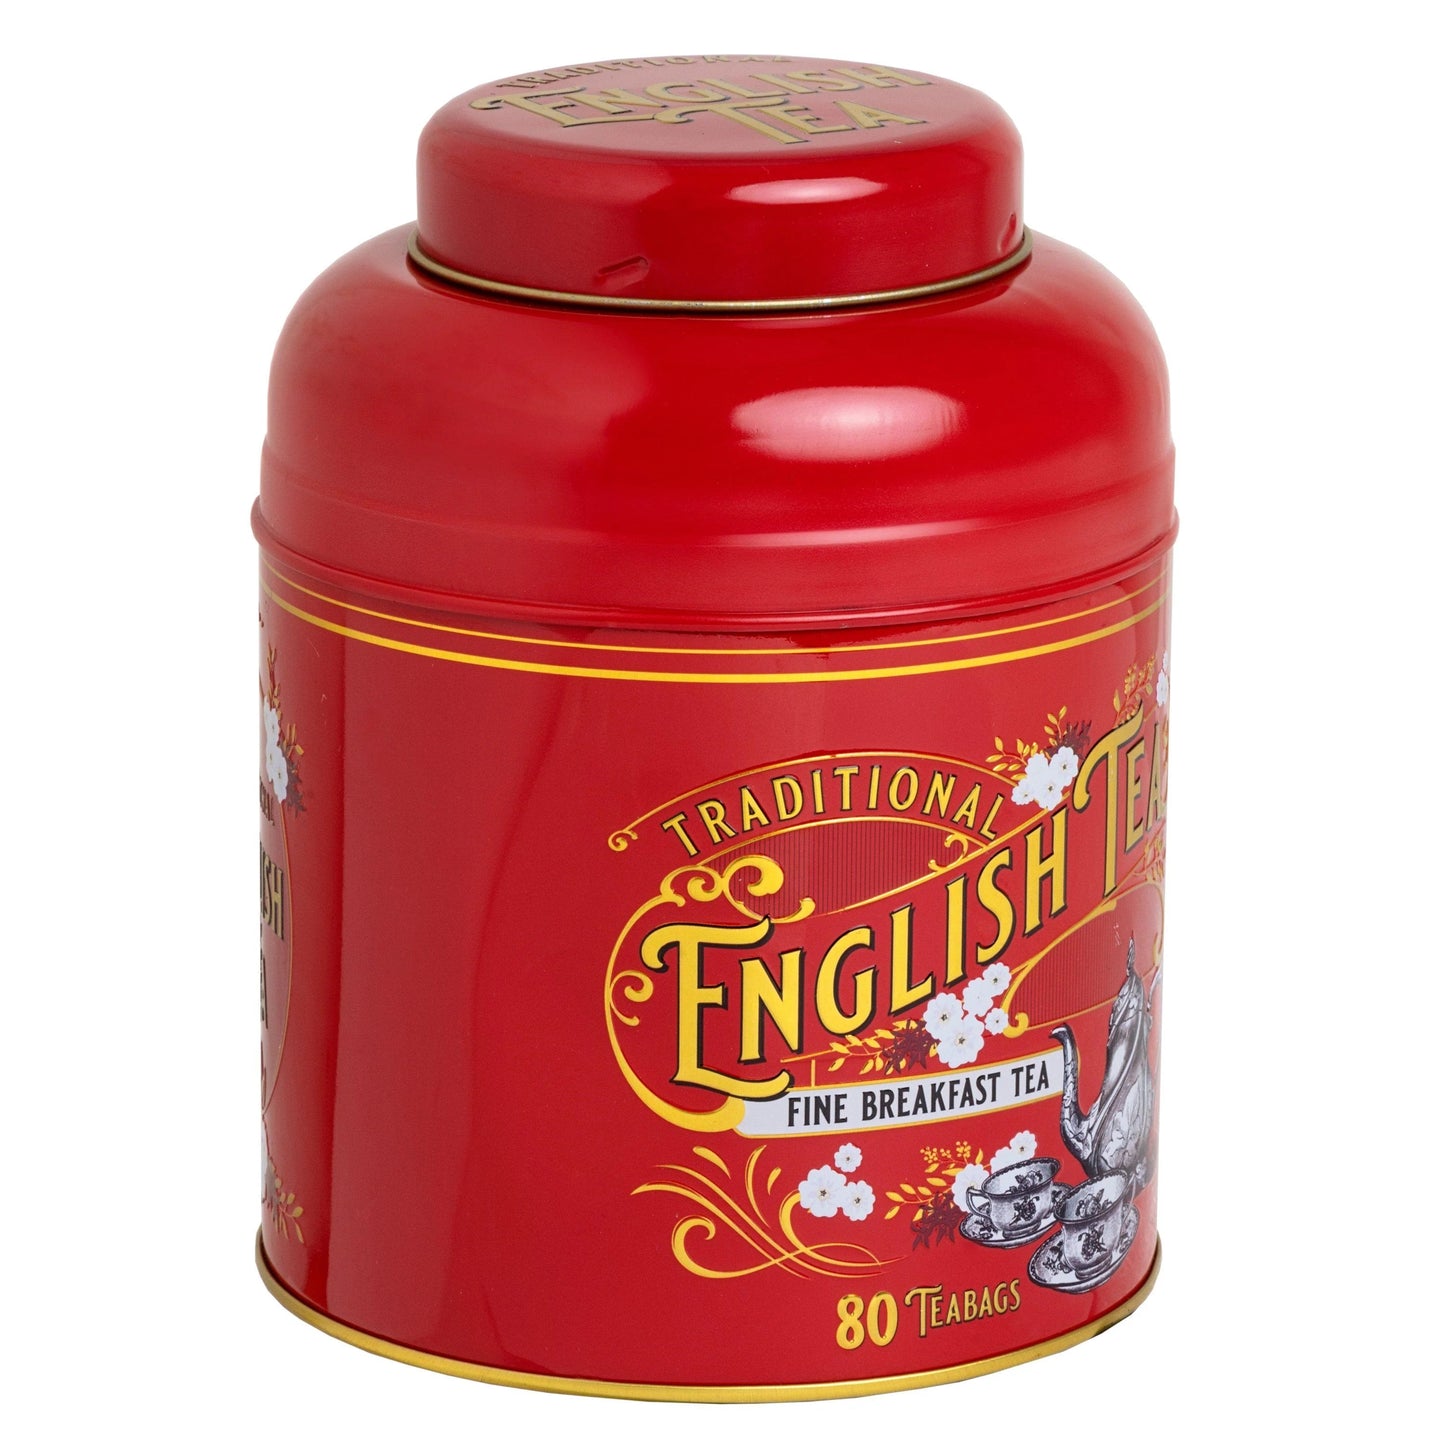 Vintage Victorian 4-Piece Tea Caddy Bundle Gift Sets New English Teas 